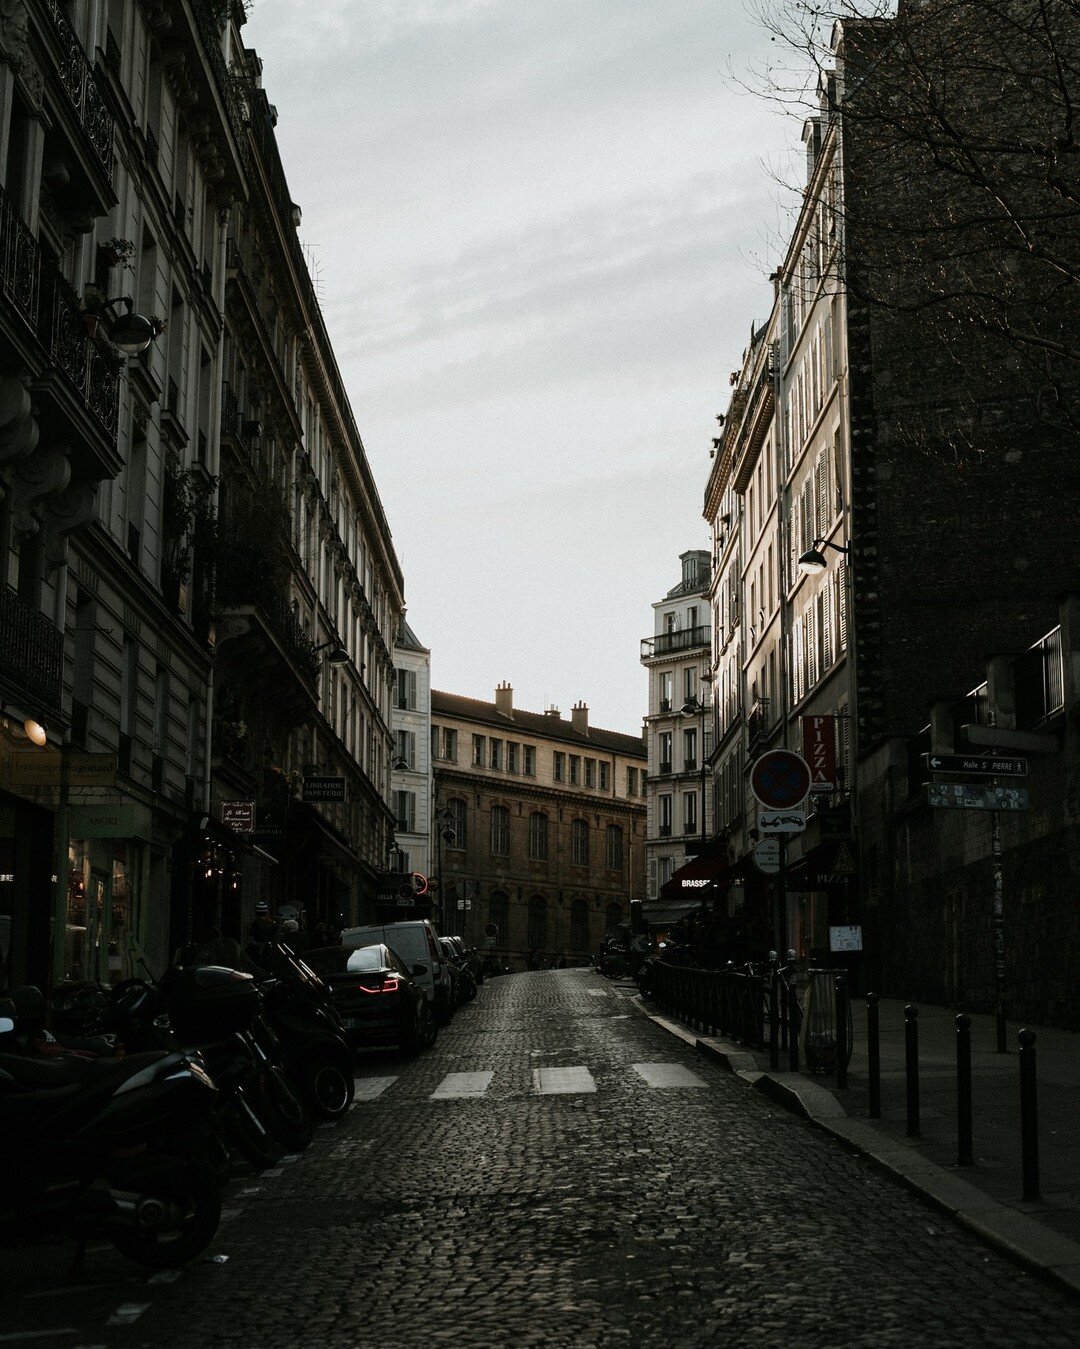 &bull; Streets of Paris &bull;
.
.
.